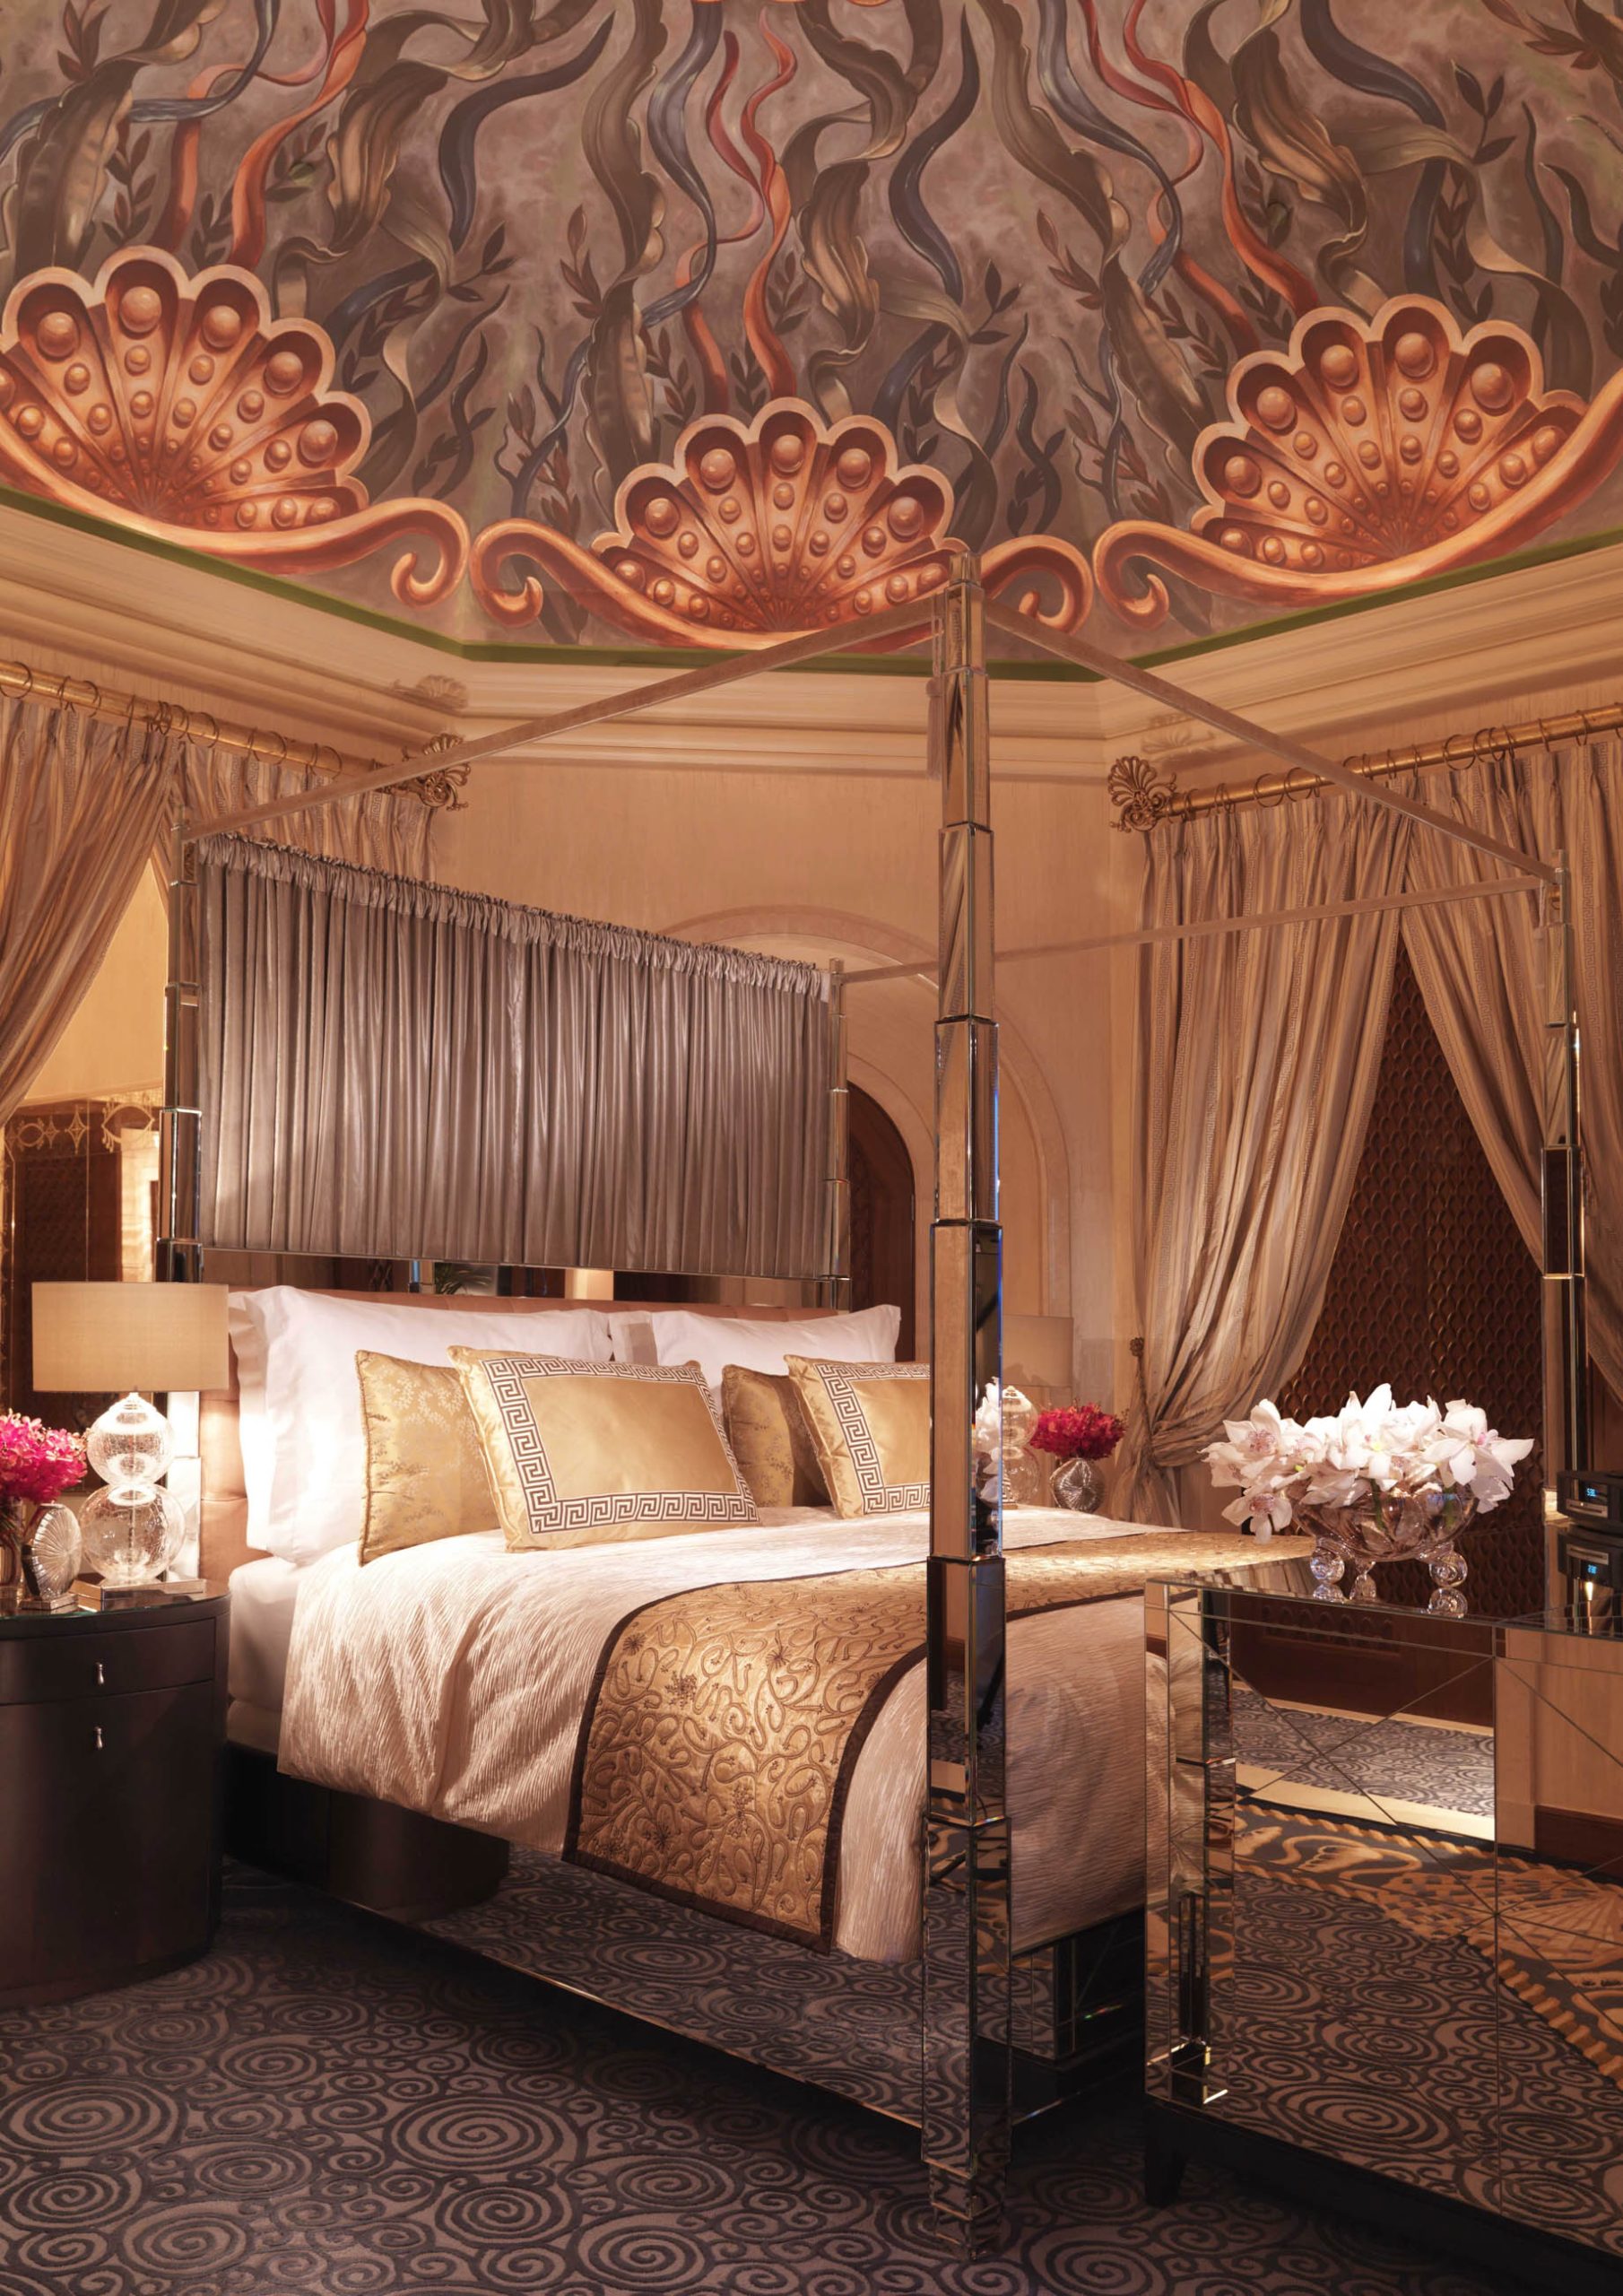 Atlantis The Palm Resort – Crescent Rd, Dubai, UAE – Royal Bridge Suite Bedroom